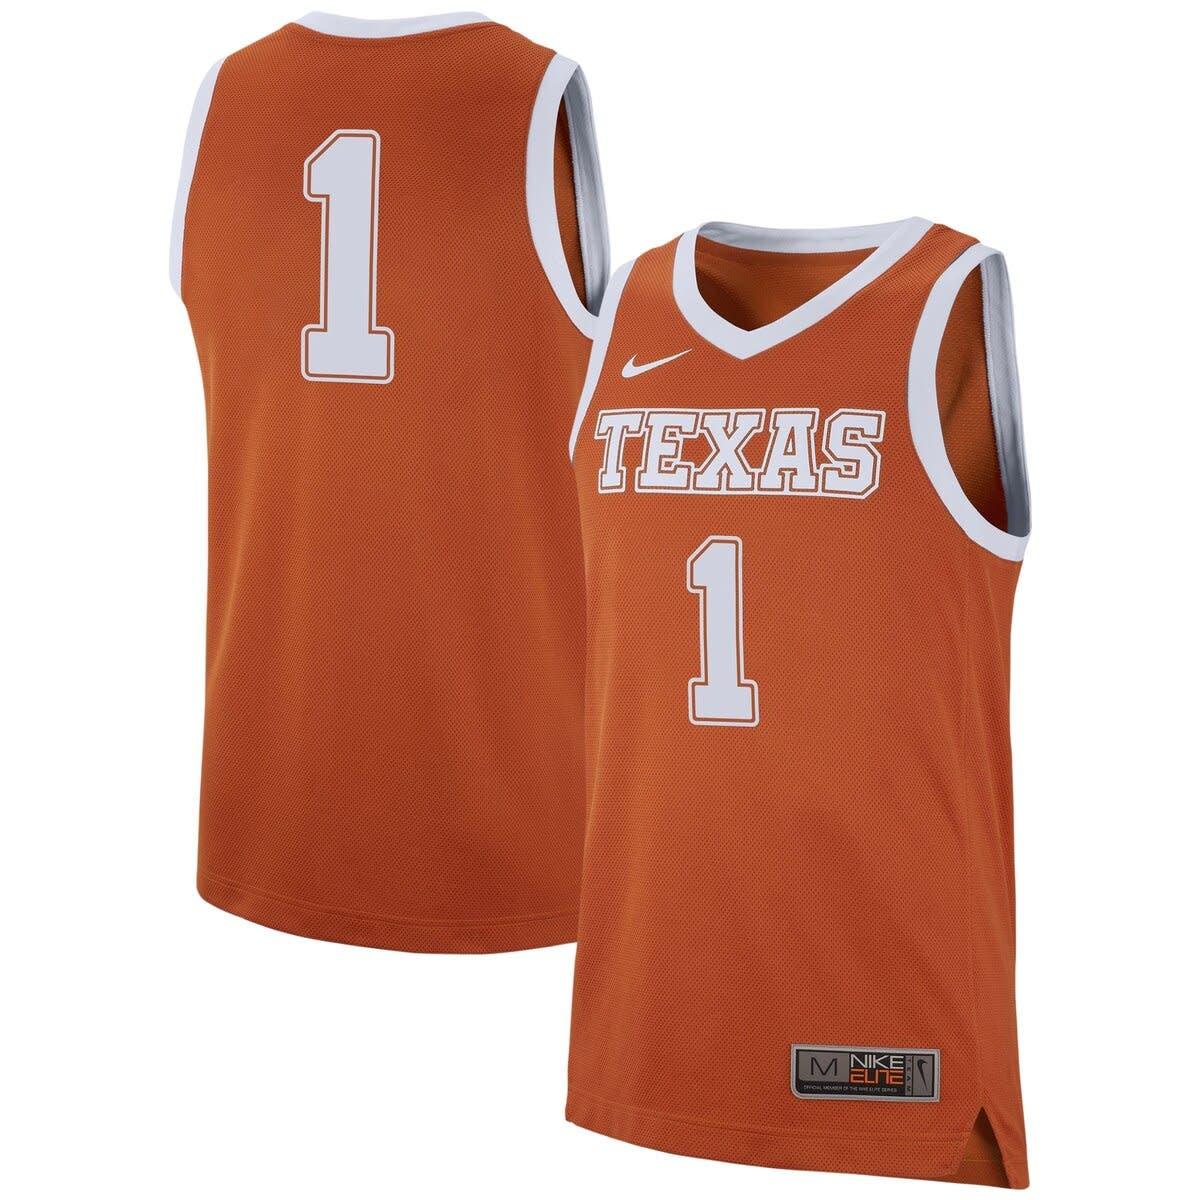 Men's Nike White Texas Longhorns Pinstripe Replica Full-Button Baseball Jersey Size: Small